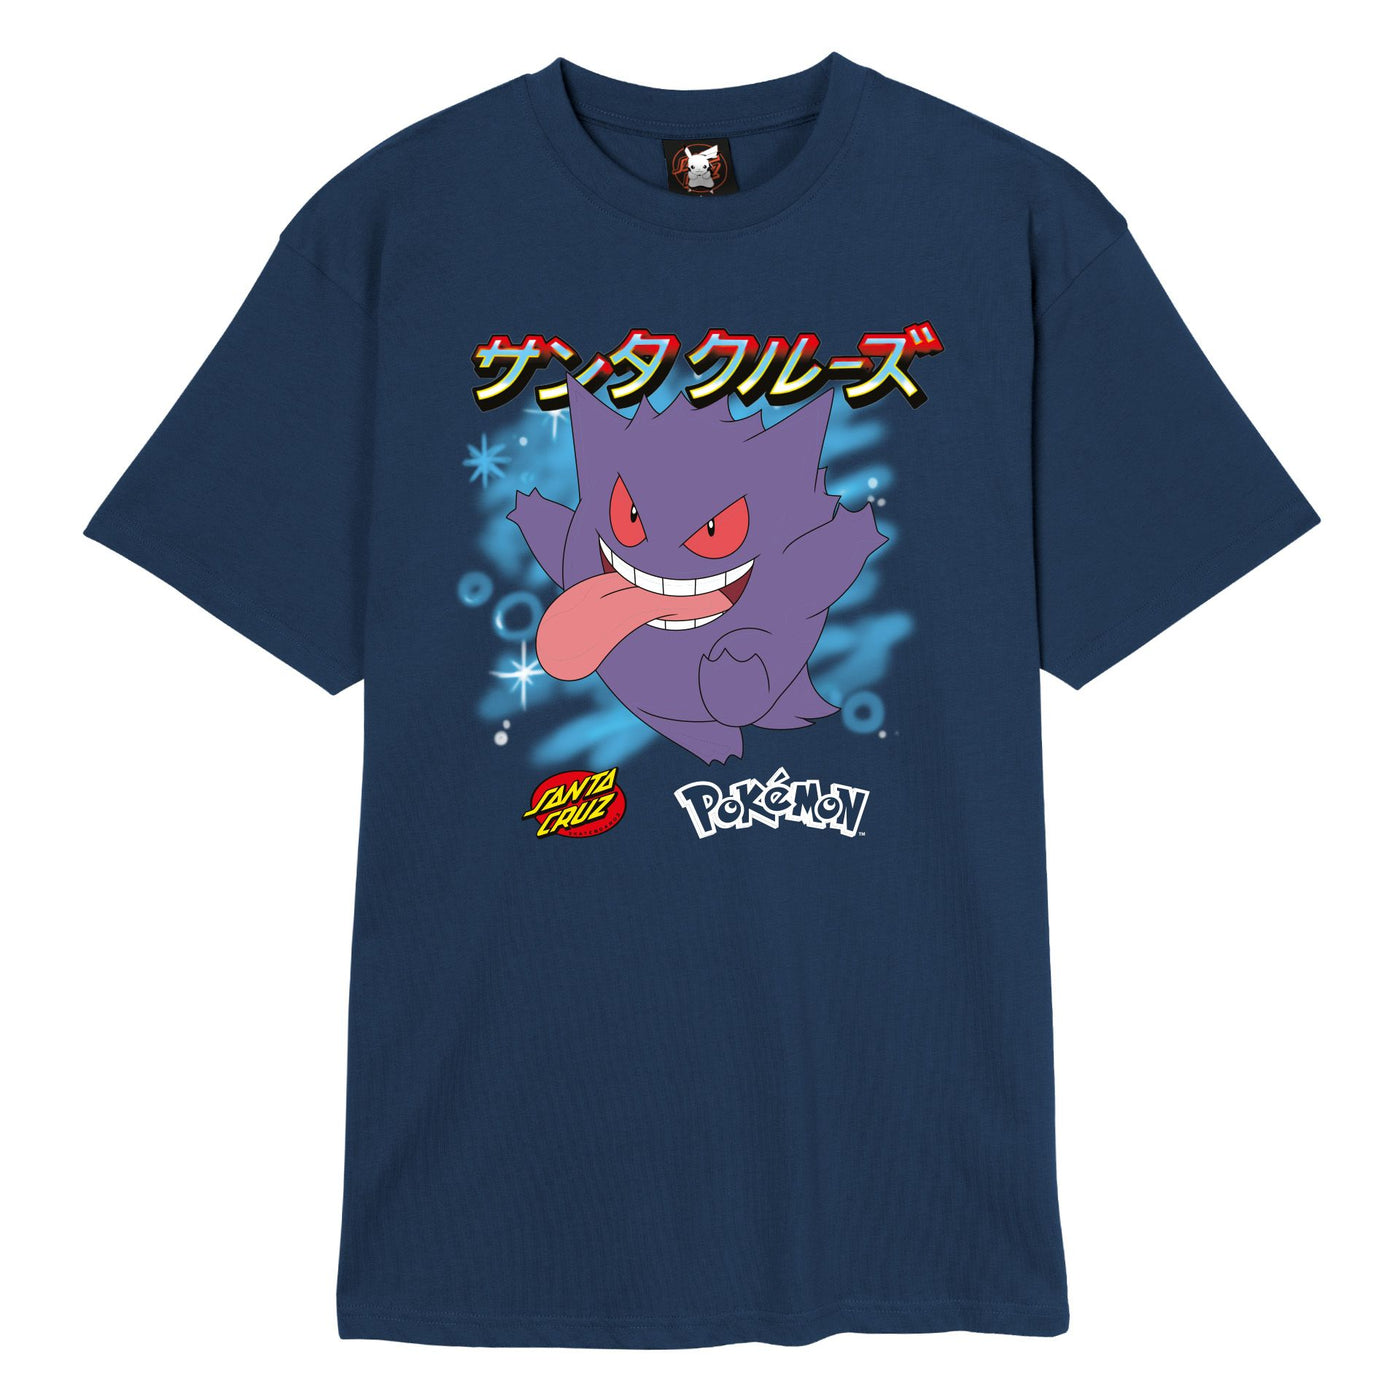 Camiseta Santa Cruz X Pokémon Fantasma Tipo 3 - Agua salada